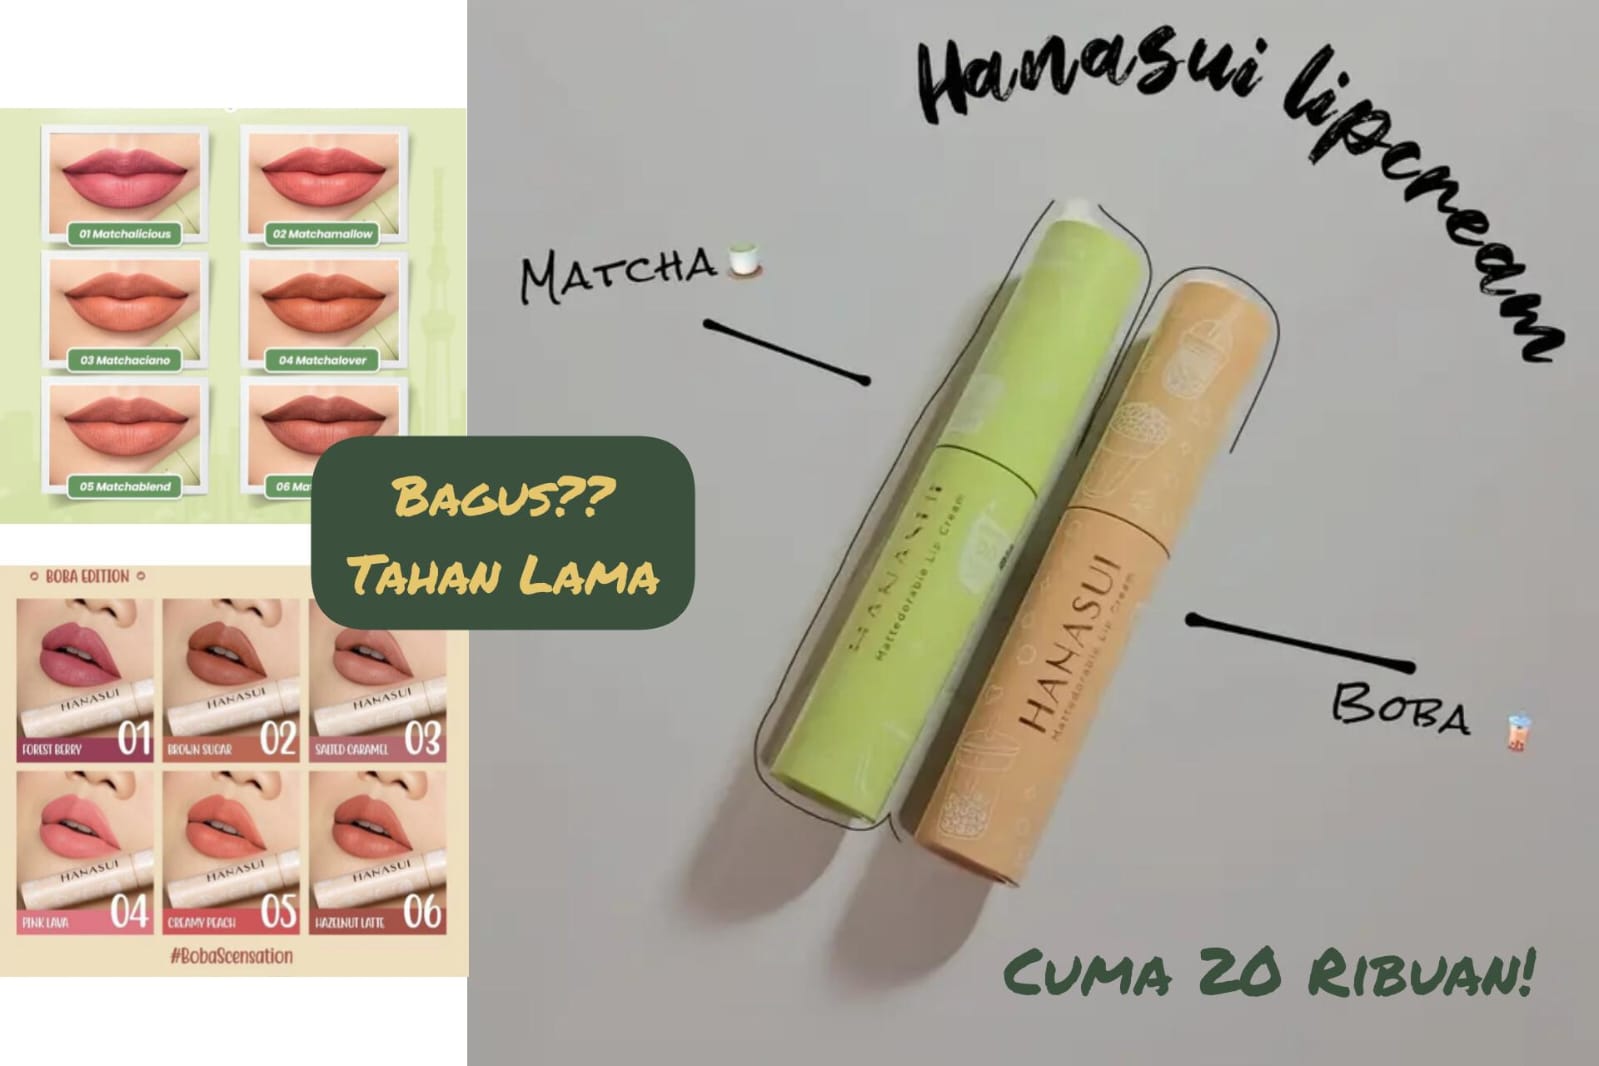 Review Jujur 2 Top Lip Cream Hanasui Boba vs Matcha Edition, Tahan Lama dengan Harga 20 Ribuan Aja!